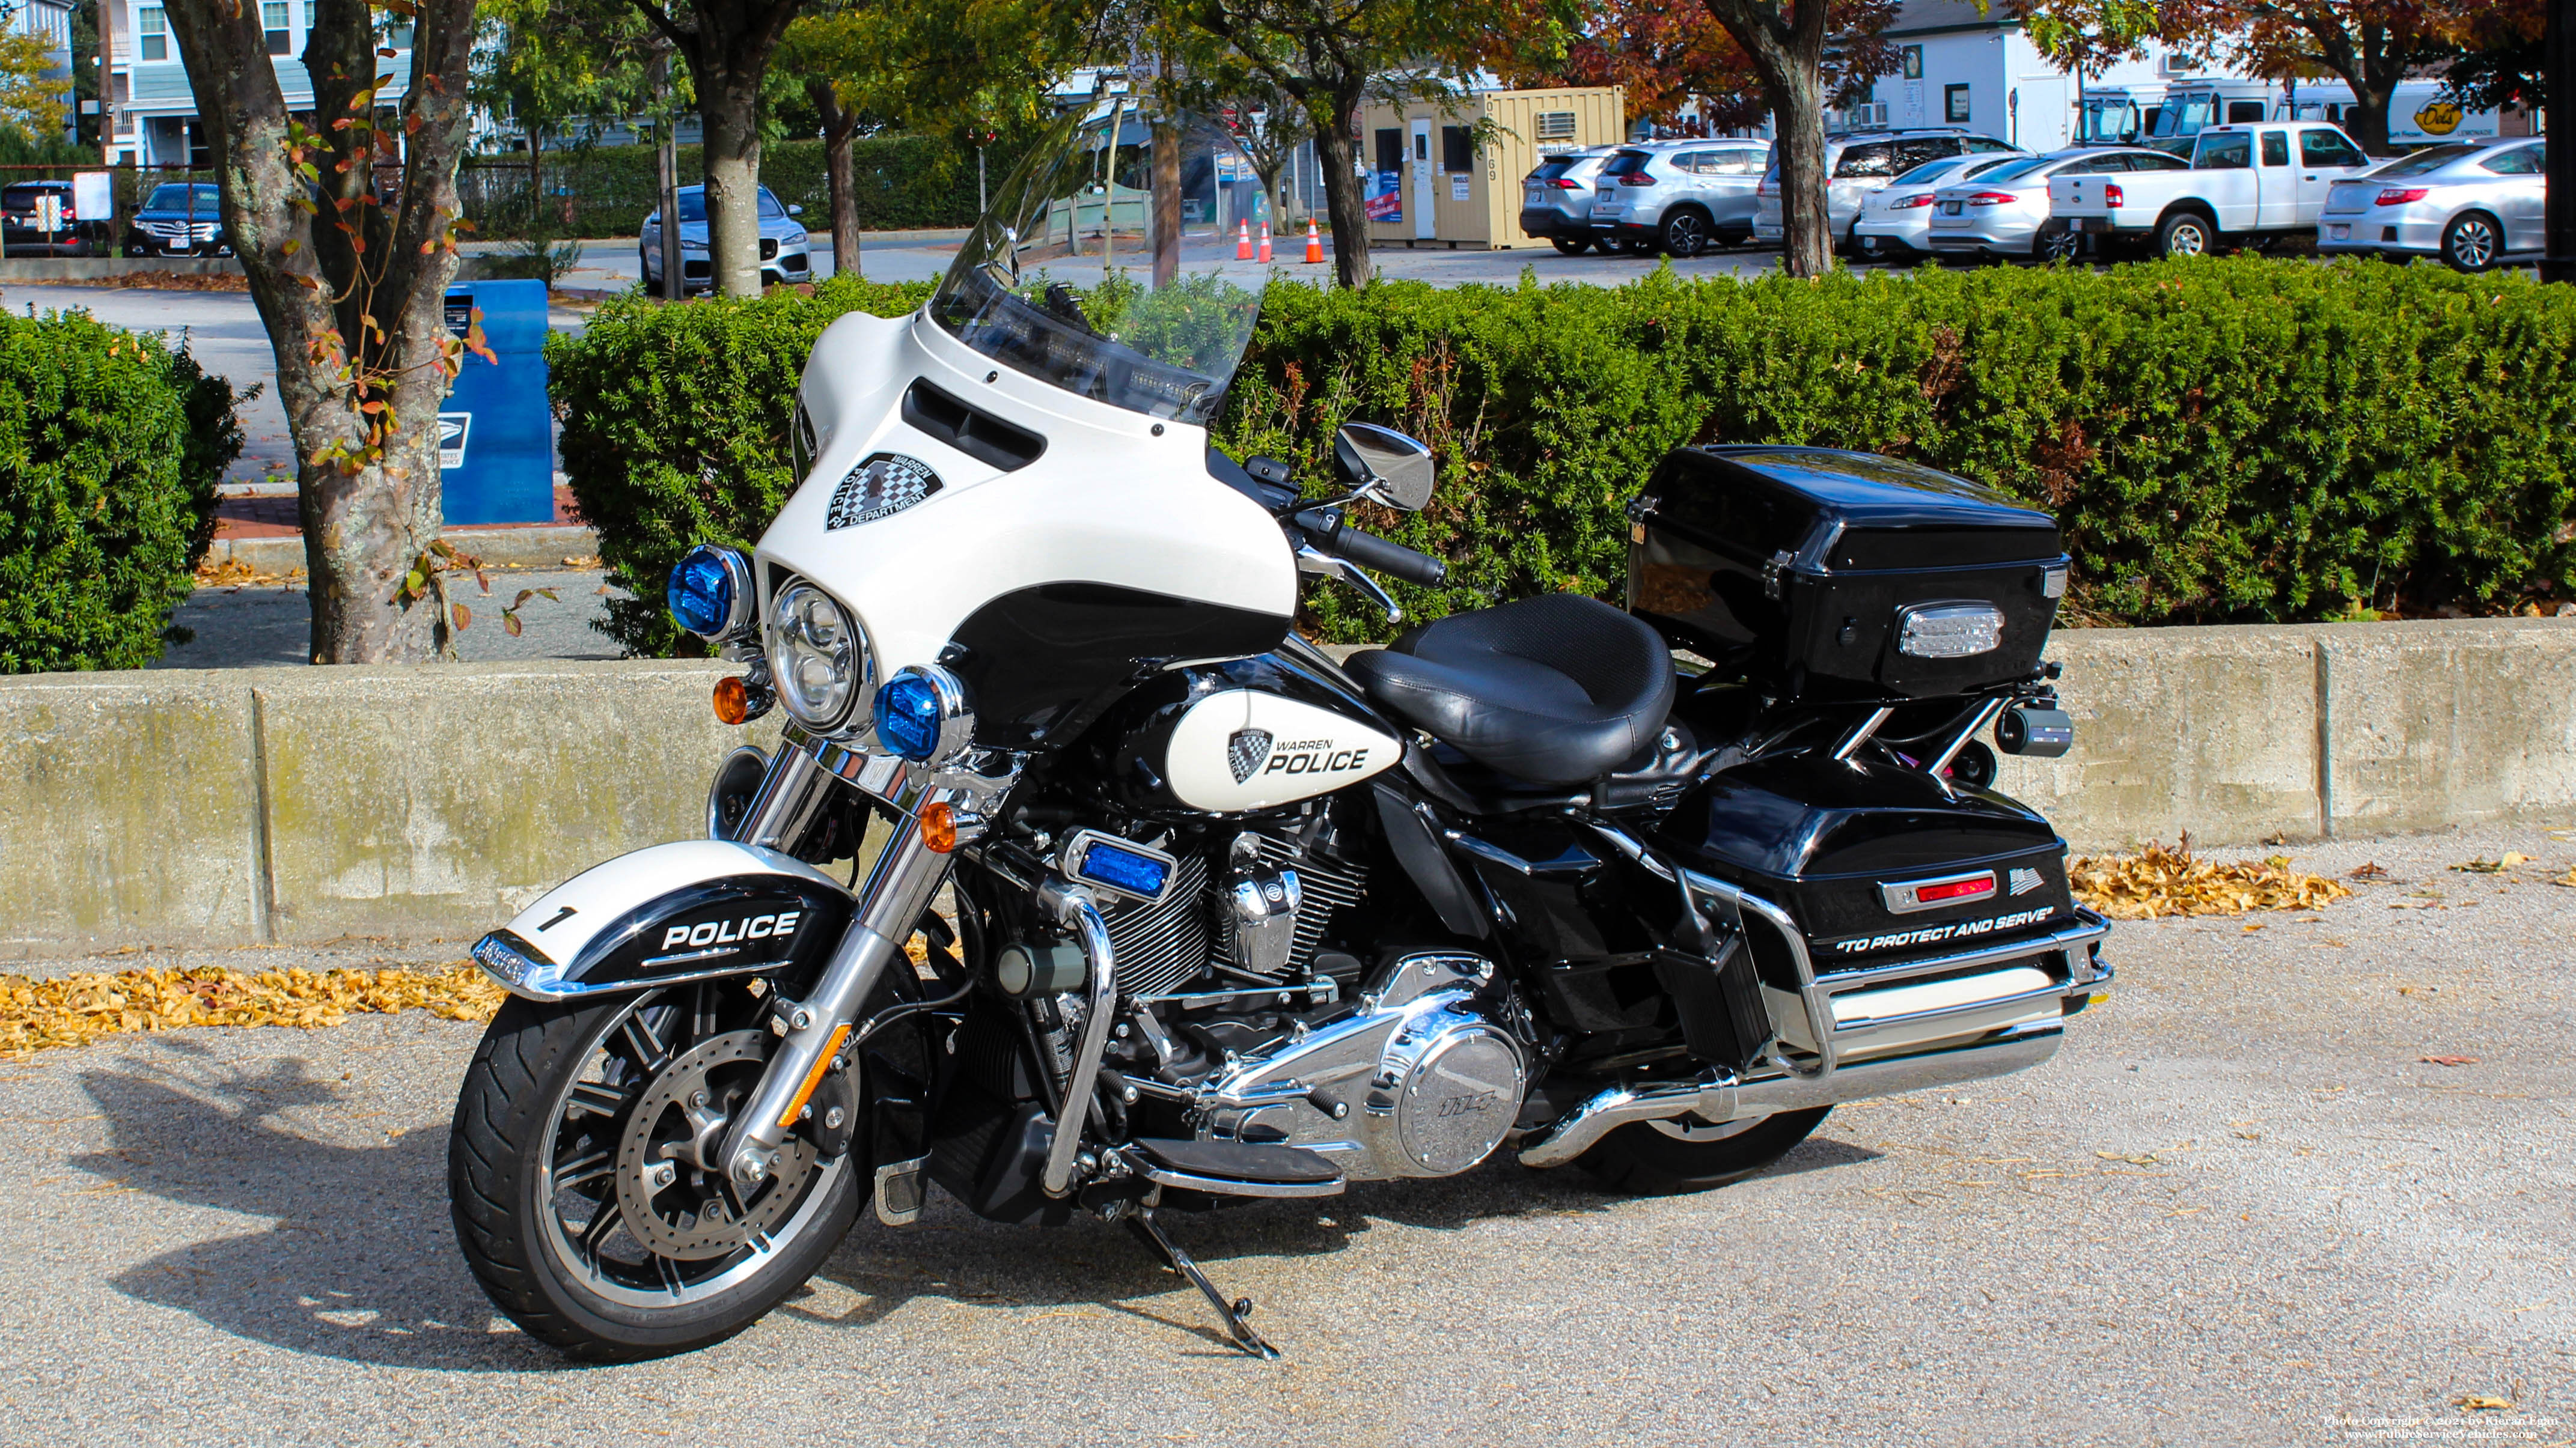 A photo  of Warren Police
            Motorcycle 1, a 2020 Harley Davidson Electra Glide             taken by Kieran Egan